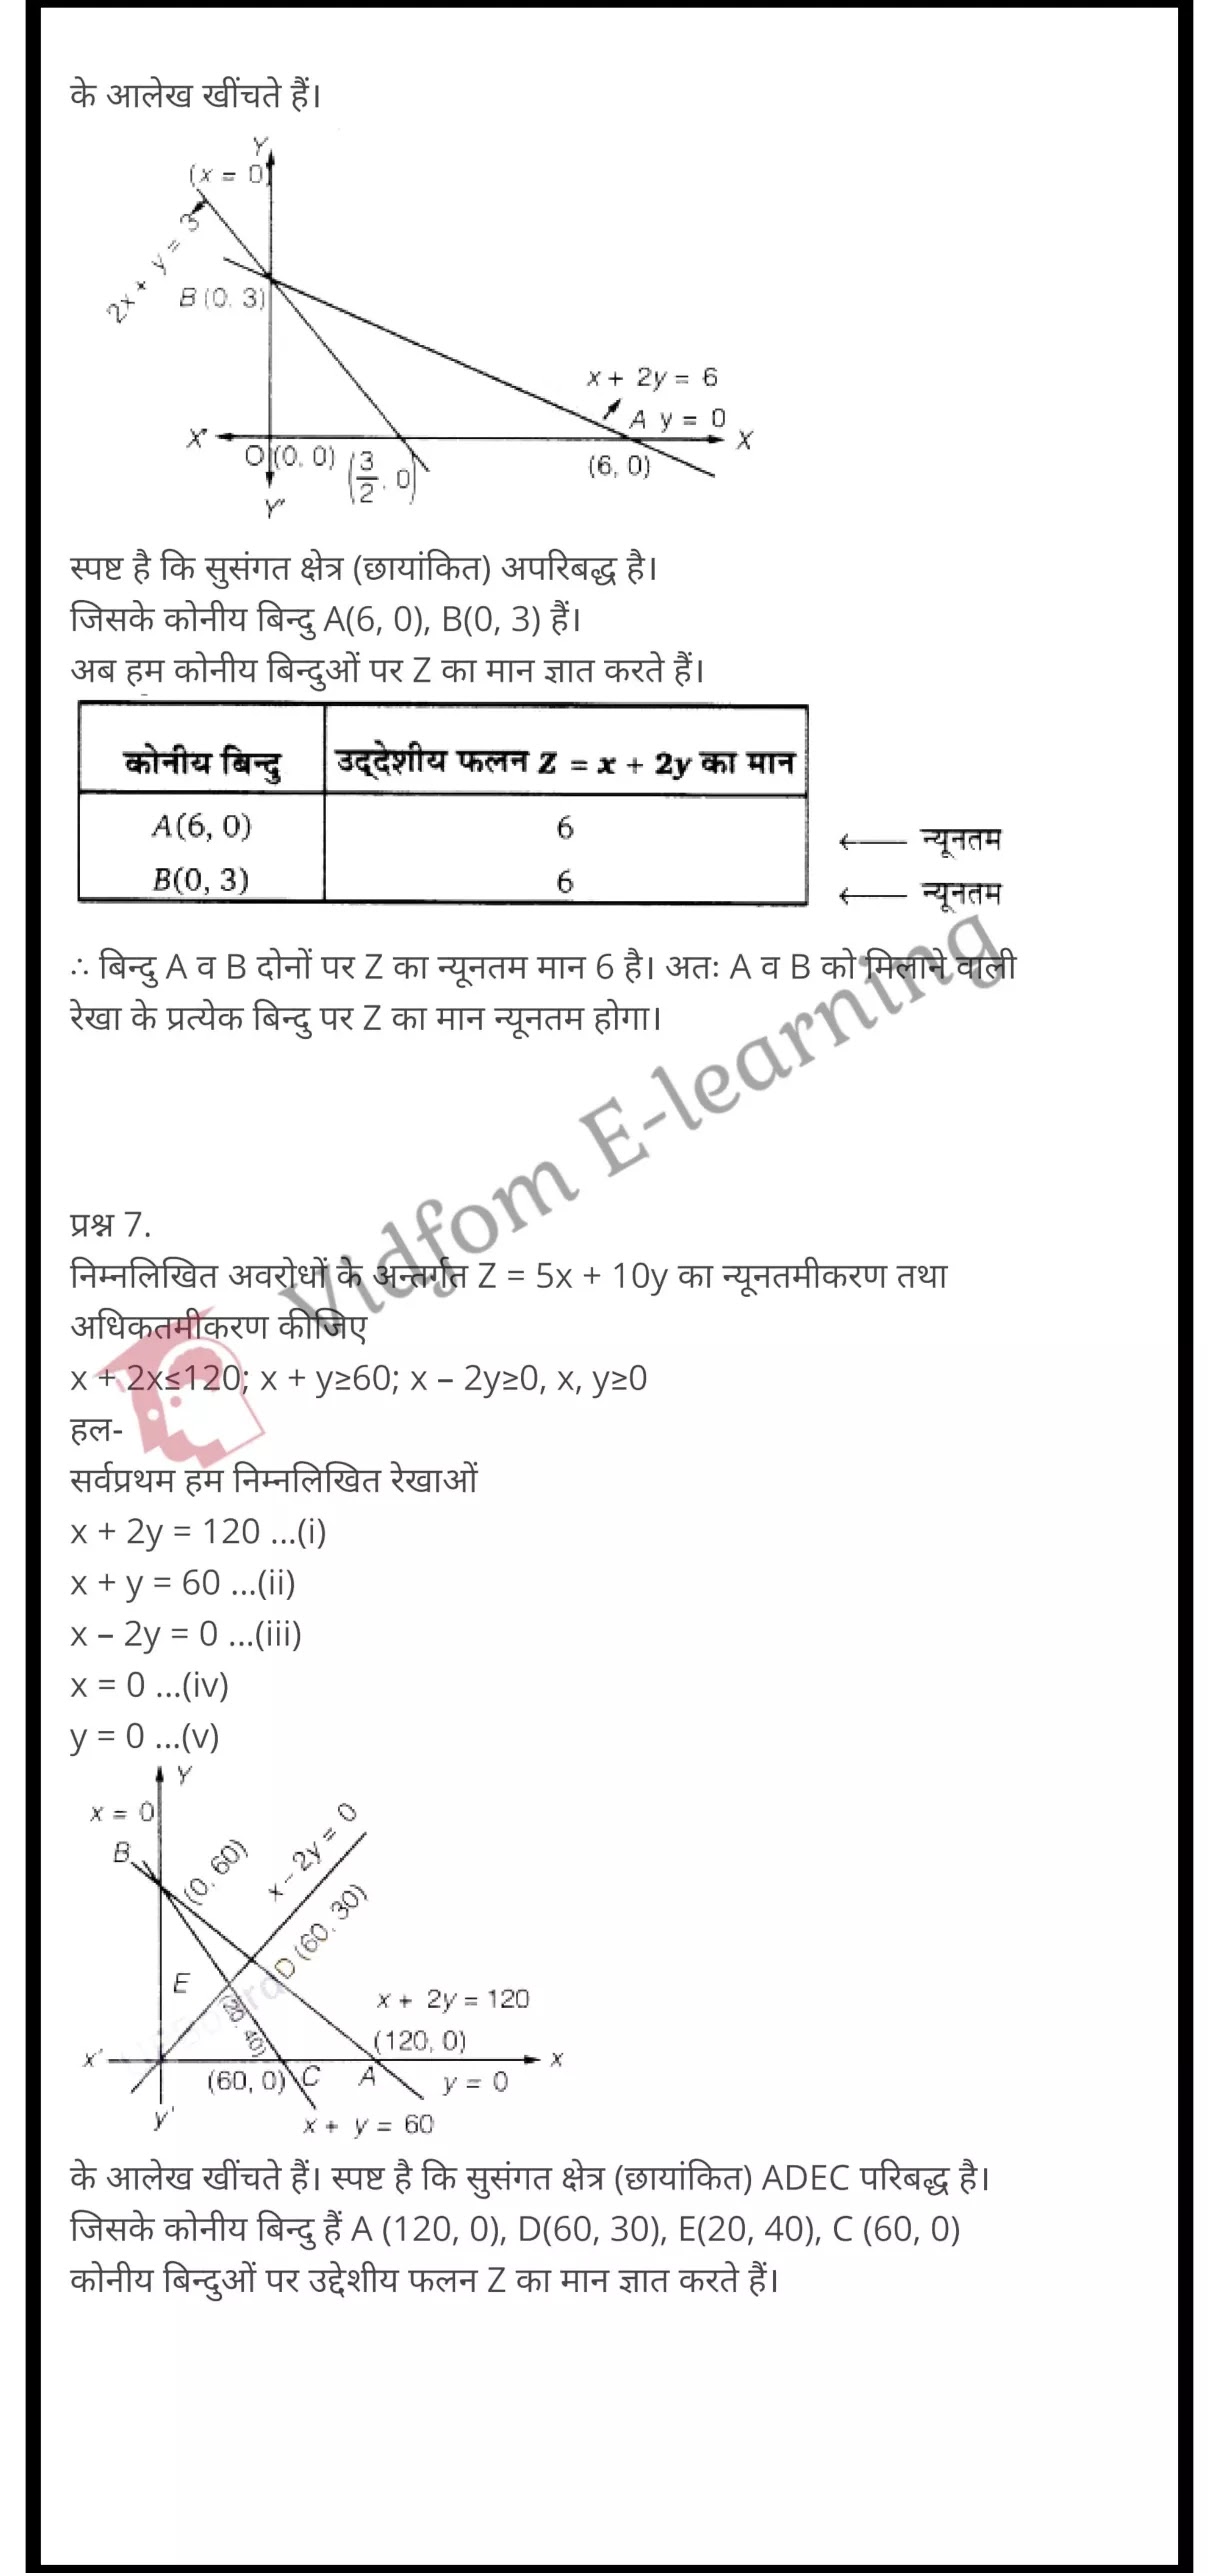 कक्षा 12 गणित  के नोट्स  हिंदी में एनसीईआरटी समाधान,     class 12 Maths Chapter 12,   class 12 Maths Chapter 12 ncert solutions in Hindi,   class 12 Maths Chapter 12 notes in hindi,   class 12 Maths Chapter 12 question answer,   class 12 Maths Chapter 12 notes,   class 12 Maths Chapter 12 class 12 Maths Chapter 12 in  hindi,    class 12 Maths Chapter 12 important questions in  hindi,   class 12 Maths Chapter 12 notes in hindi,    class 12 Maths Chapter 12 test,   class 12 Maths Chapter 12 pdf,   class 12 Maths Chapter 12 notes pdf,   class 12 Maths Chapter 12 exercise solutions,   class 12 Maths Chapter 12 notes study rankers,   class 12 Maths Chapter 12 notes,    class 12 Maths Chapter 12  class 12  notes pdf,   class 12 Maths Chapter 12 class 12  notes  ncert,   class 12 Maths Chapter 12 class 12 pdf,   class 12 Maths Chapter 12  book,   class 12 Maths Chapter 12 quiz class 12  ,    12  th class 12 Maths Chapter 12  book up board,   up board 12  th class 12 Maths Chapter 12 notes,  class 12 Maths,   class 12 Maths ncert solutions in Hindi,   class 12 Maths notes in hindi,   class 12 Maths question answer,   class 12 Maths notes,  class 12 Maths class 12 Maths Chapter 12 in  hindi,    class 12 Maths important questions in  hindi,   class 12 Maths notes in hindi,    class 12 Maths test,  class 12 Maths class 12 Maths Chapter 12 pdf,   class 12 Maths notes pdf,   class 12 Maths exercise solutions,   class 12 Maths,  class 12 Maths notes study rankers,   class 12 Maths notes,  class 12 Maths notes,   class 12 Maths  class 12  notes pdf,   class 12 Maths class 12  notes  ncert,   class 12 Maths class 12 pdf,   class 12 Maths  book,  class 12 Maths quiz class 12  ,  12  th class 12 Maths    book up board,    up board 12  th class 12 Maths notes,      कक्षा 12 गणित अध्याय 12 ,  कक्षा 12 गणित, कक्षा 12 गणित अध्याय 12  के नोट्स हिंदी में,  कक्षा 12 का हिंदी अध्याय 12 का प्रश्न उत्तर,  कक्षा 12 गणित अध्याय 12  के नोट्स,  12 कक्षा गणित  हिंदी में, कक्षा 12 गणित अध्याय 12  हिंदी में,  कक्षा 12 गणित अध्याय 12  महत्वपूर्ण प्रश्न हिंदी में, कक्षा 12   हिंदी के नोट्स  हिंदी में, गणित हिंदी में  कक्षा 12 नोट्स pdf,    गणित हिंदी में  कक्षा 12 नोट्स 2021 ncert,   गणित हिंदी  कक्षा 12 pdf,   गणित हिंदी में  पुस्तक,   गणित हिंदी में की बुक,   गणित हिंदी में  प्रश्नोत्तरी class 12 ,  बिहार बोर्ड   पुस्तक 12वीं हिंदी नोट्स,    गणित कक्षा 12 नोट्स 2021 ncert,   गणित  कक्षा 12 pdf,   गणित  पुस्तक,   गणित  प्रश्नोत्तरी class 12, कक्षा 12 गणित,  कक्षा 12 गणित  के नोट्स हिंदी में,  कक्षा 12 का हिंदी का प्रश्न उत्तर,  कक्षा 12 गणित  के नोट्स,  12 कक्षा हिंदी 2021  हिंदी में, कक्षा 12 गणित  हिंदी में,  कक्षा 12 गणित  महत्वपूर्ण प्रश्न हिंदी में, कक्षा 12 गणित  नोट्स  हिंदी में,